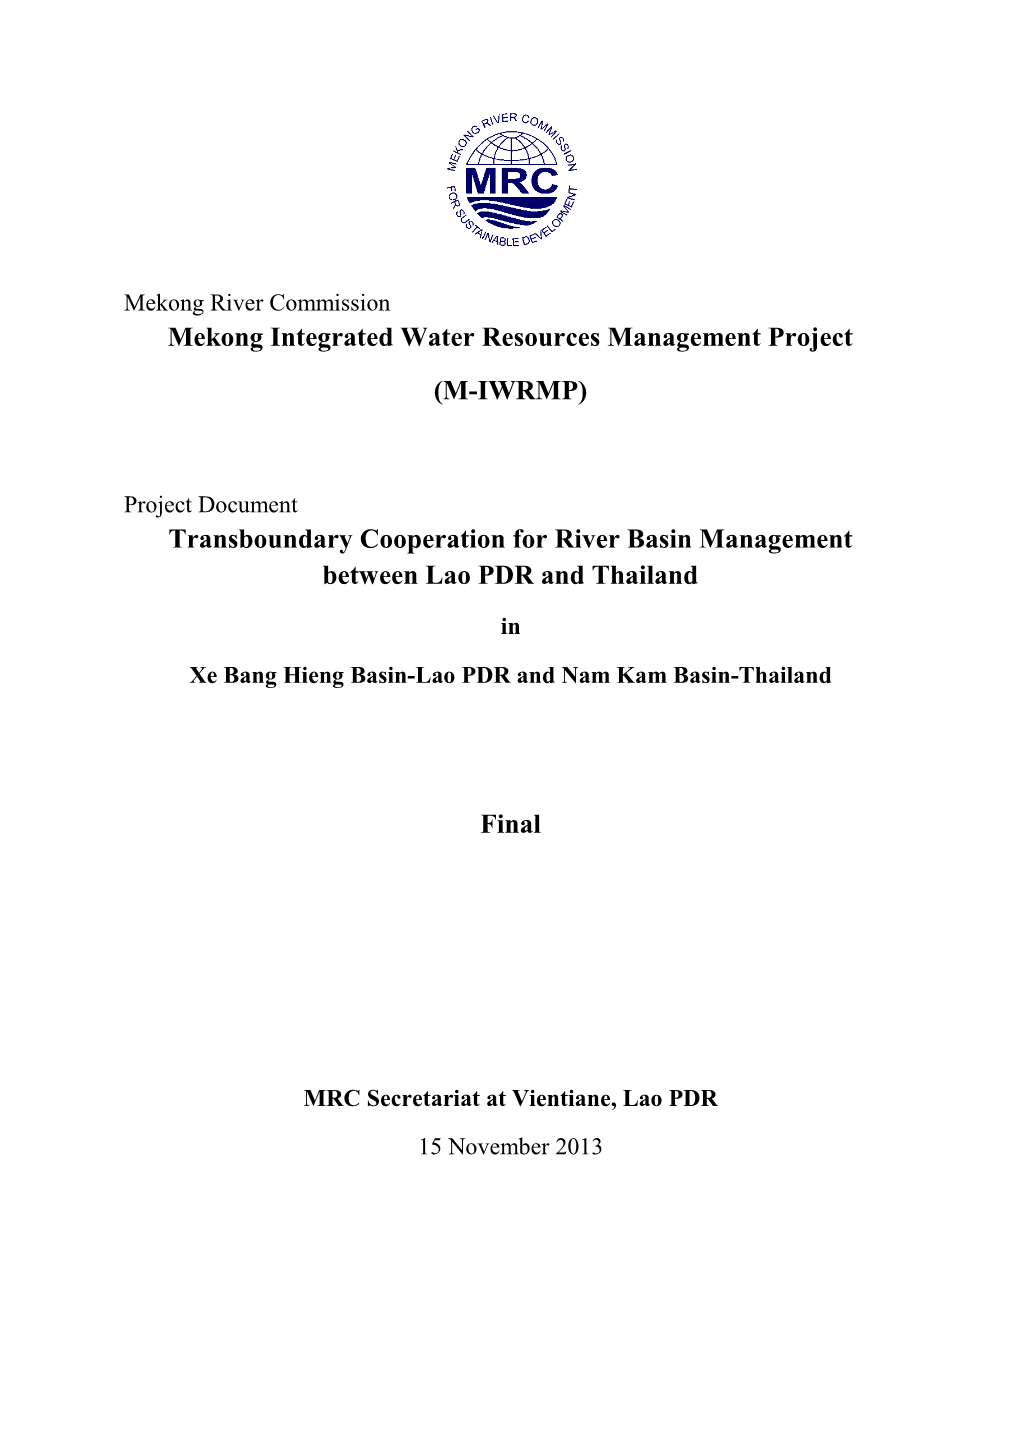 Xe Bang Hieng and Nam Kam River Basins Wetland Management Project